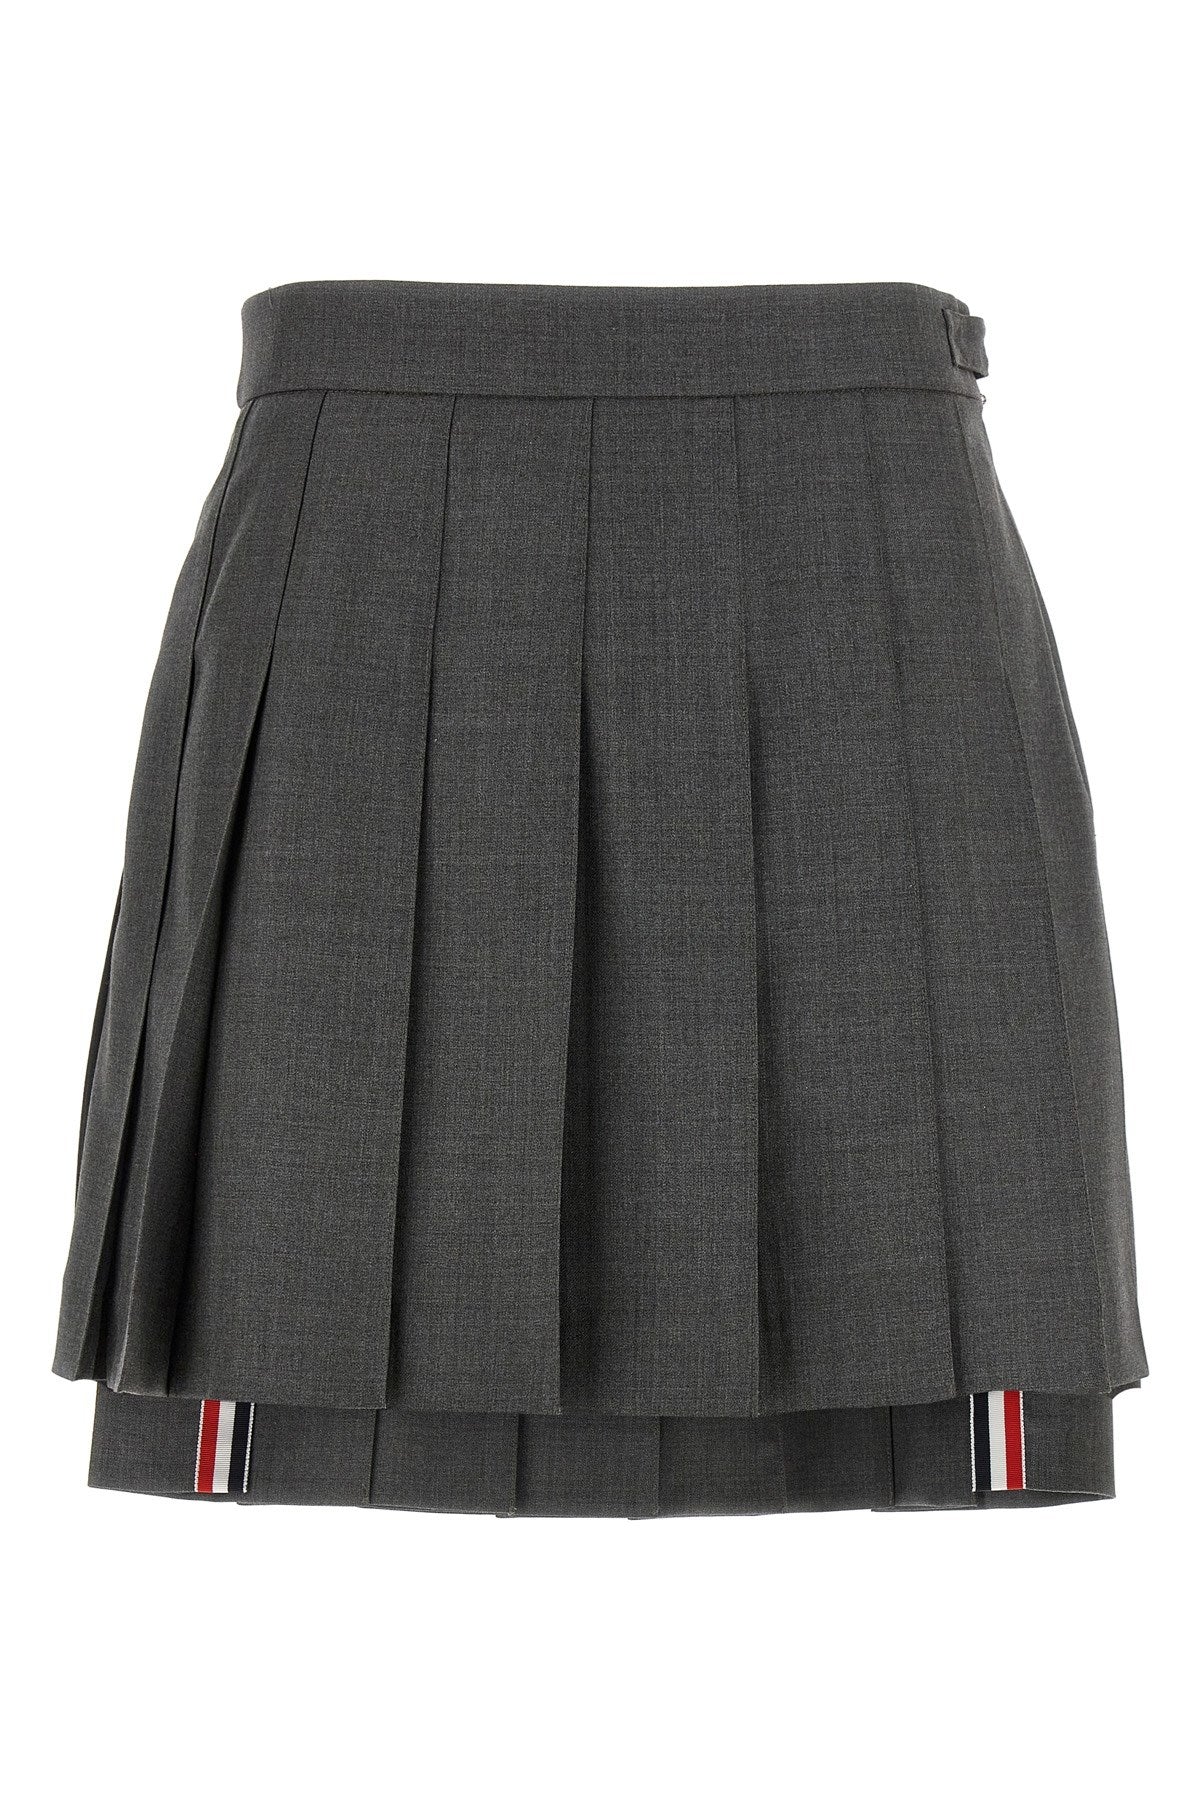 Thom Browne Women 'uniform' Mini Skirt In Gray